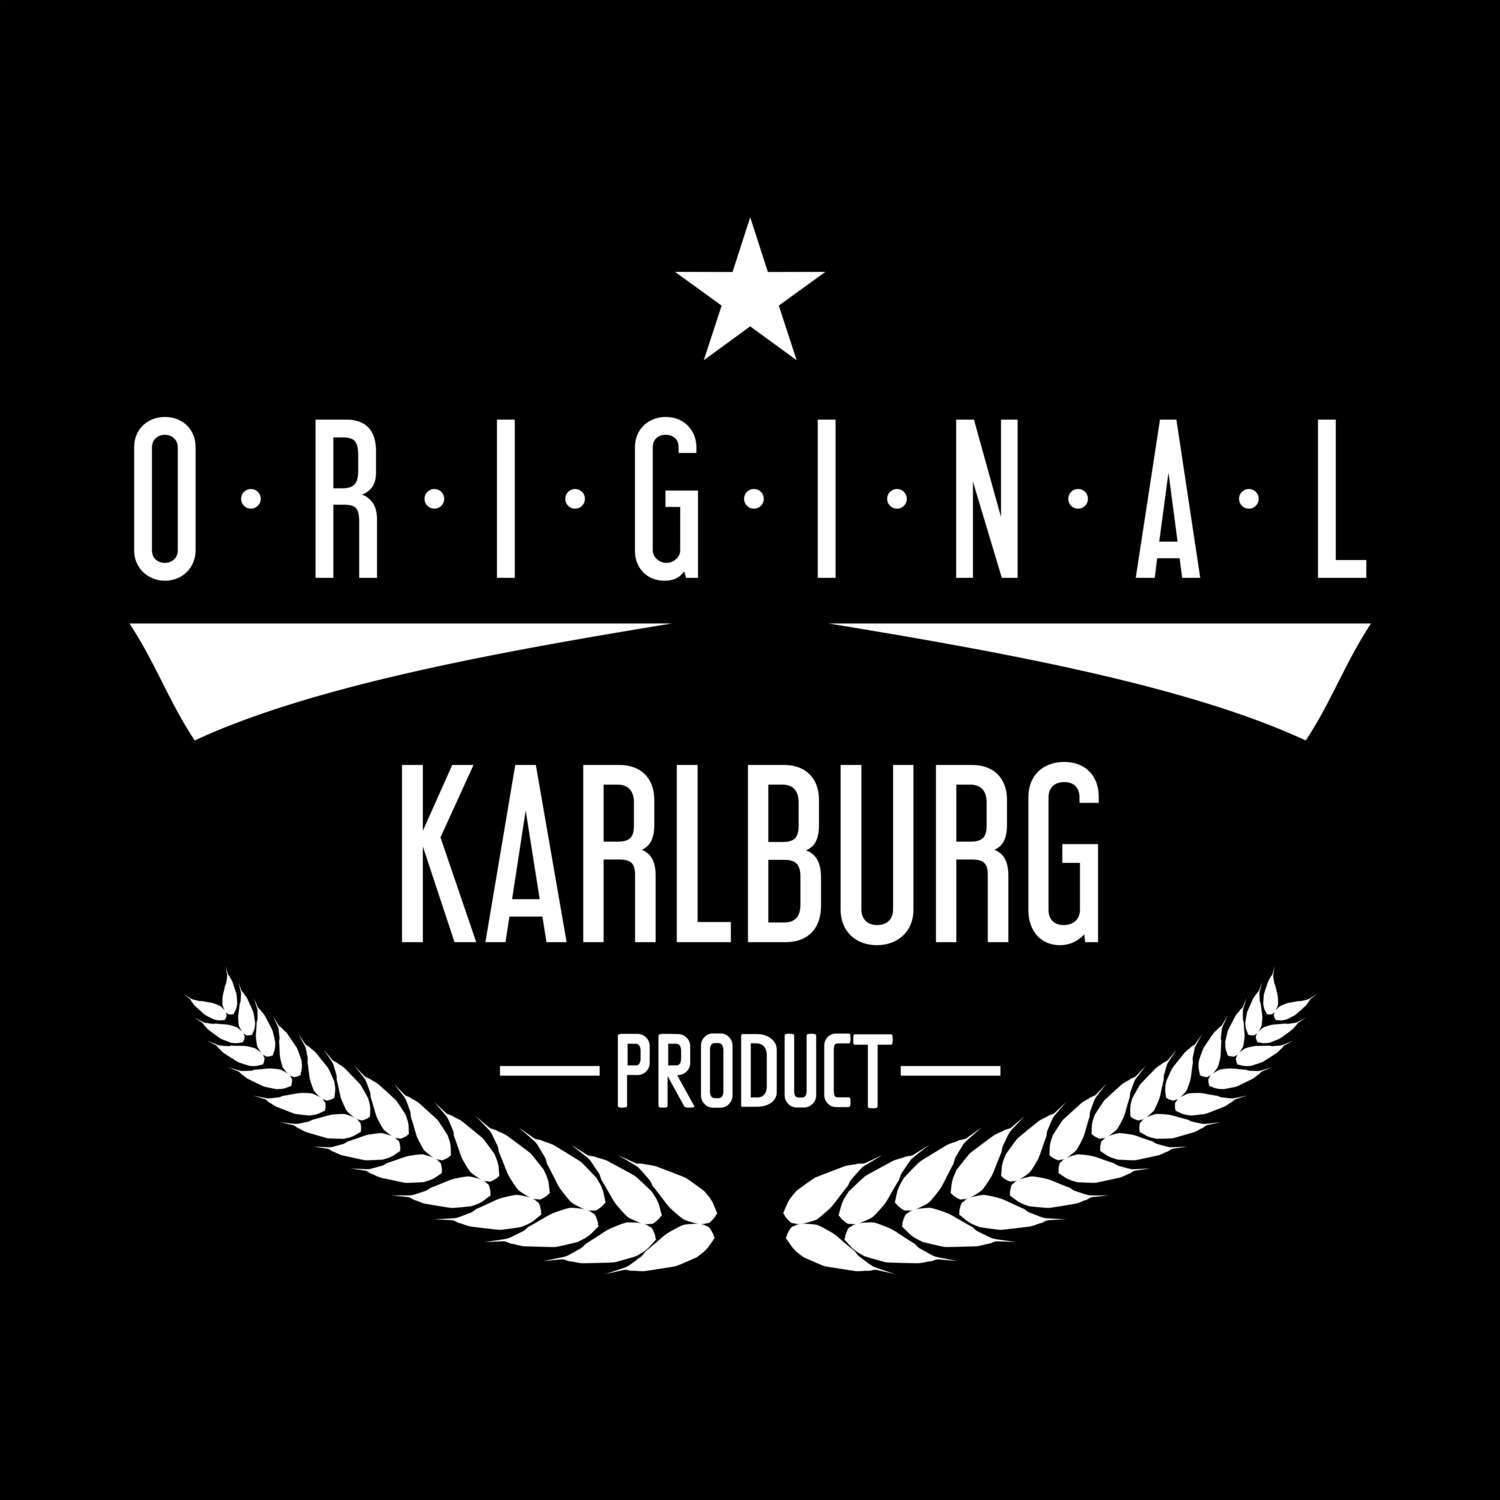 Karlburg T-Shirt »Original Product«